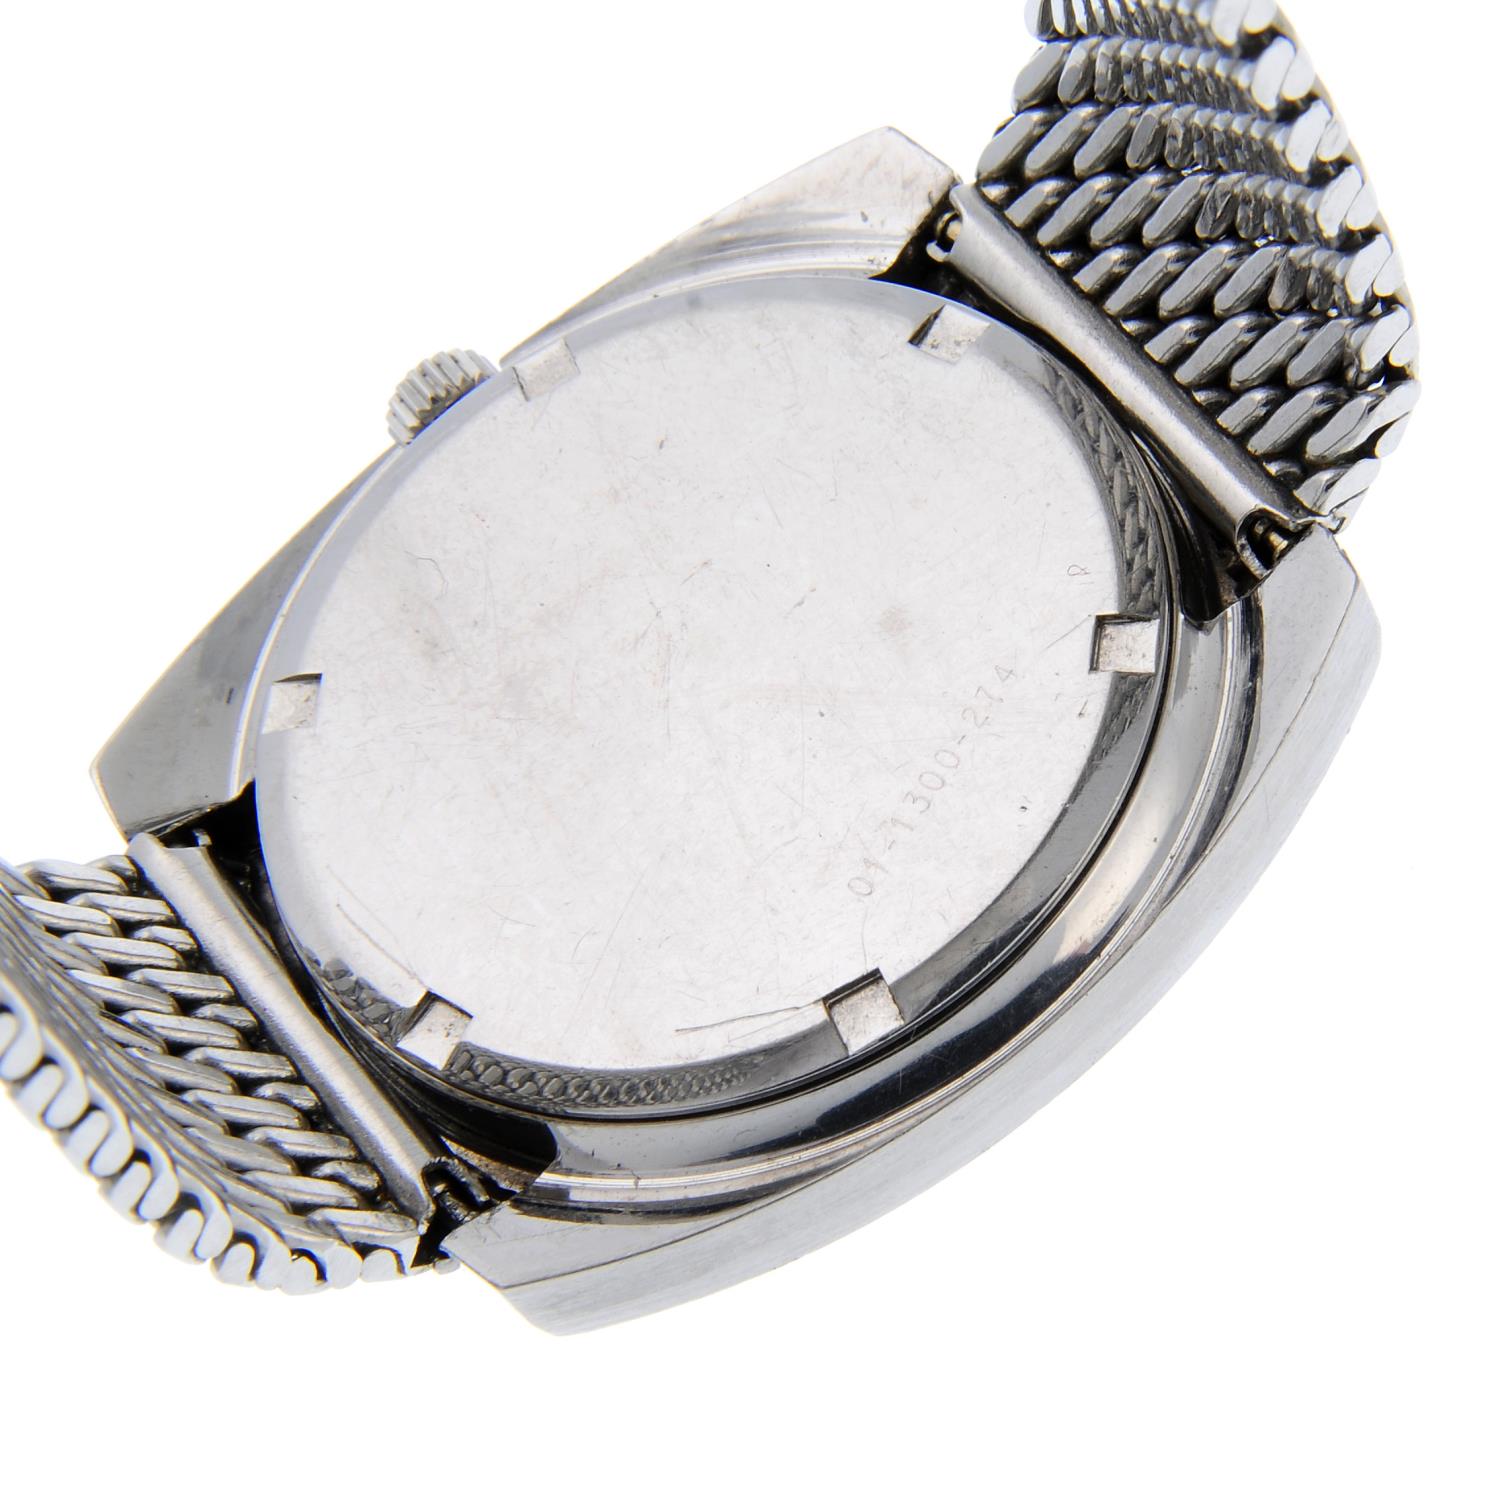 ZENITH - a gentleman's Sporto bracelet watch. - Image 4 of 4